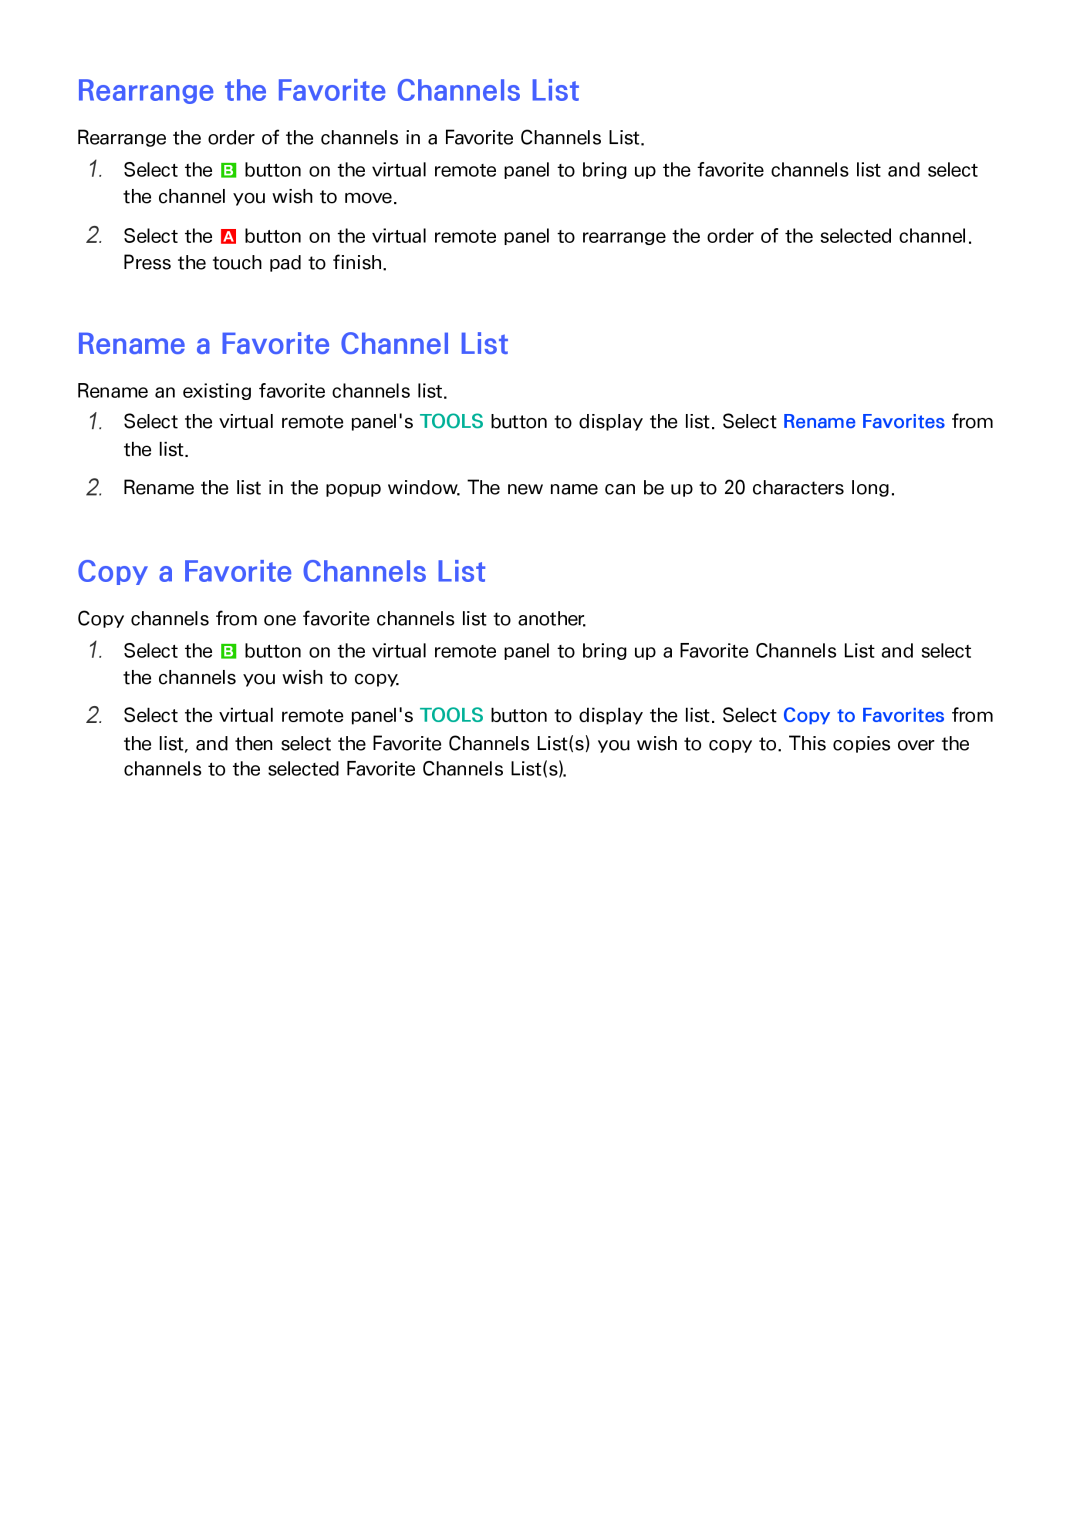 Samsung SEK-1000 manual Rearrange the Favorite Channels List, Rename a Favorite Channel List, Copy a Favorite Channels List 